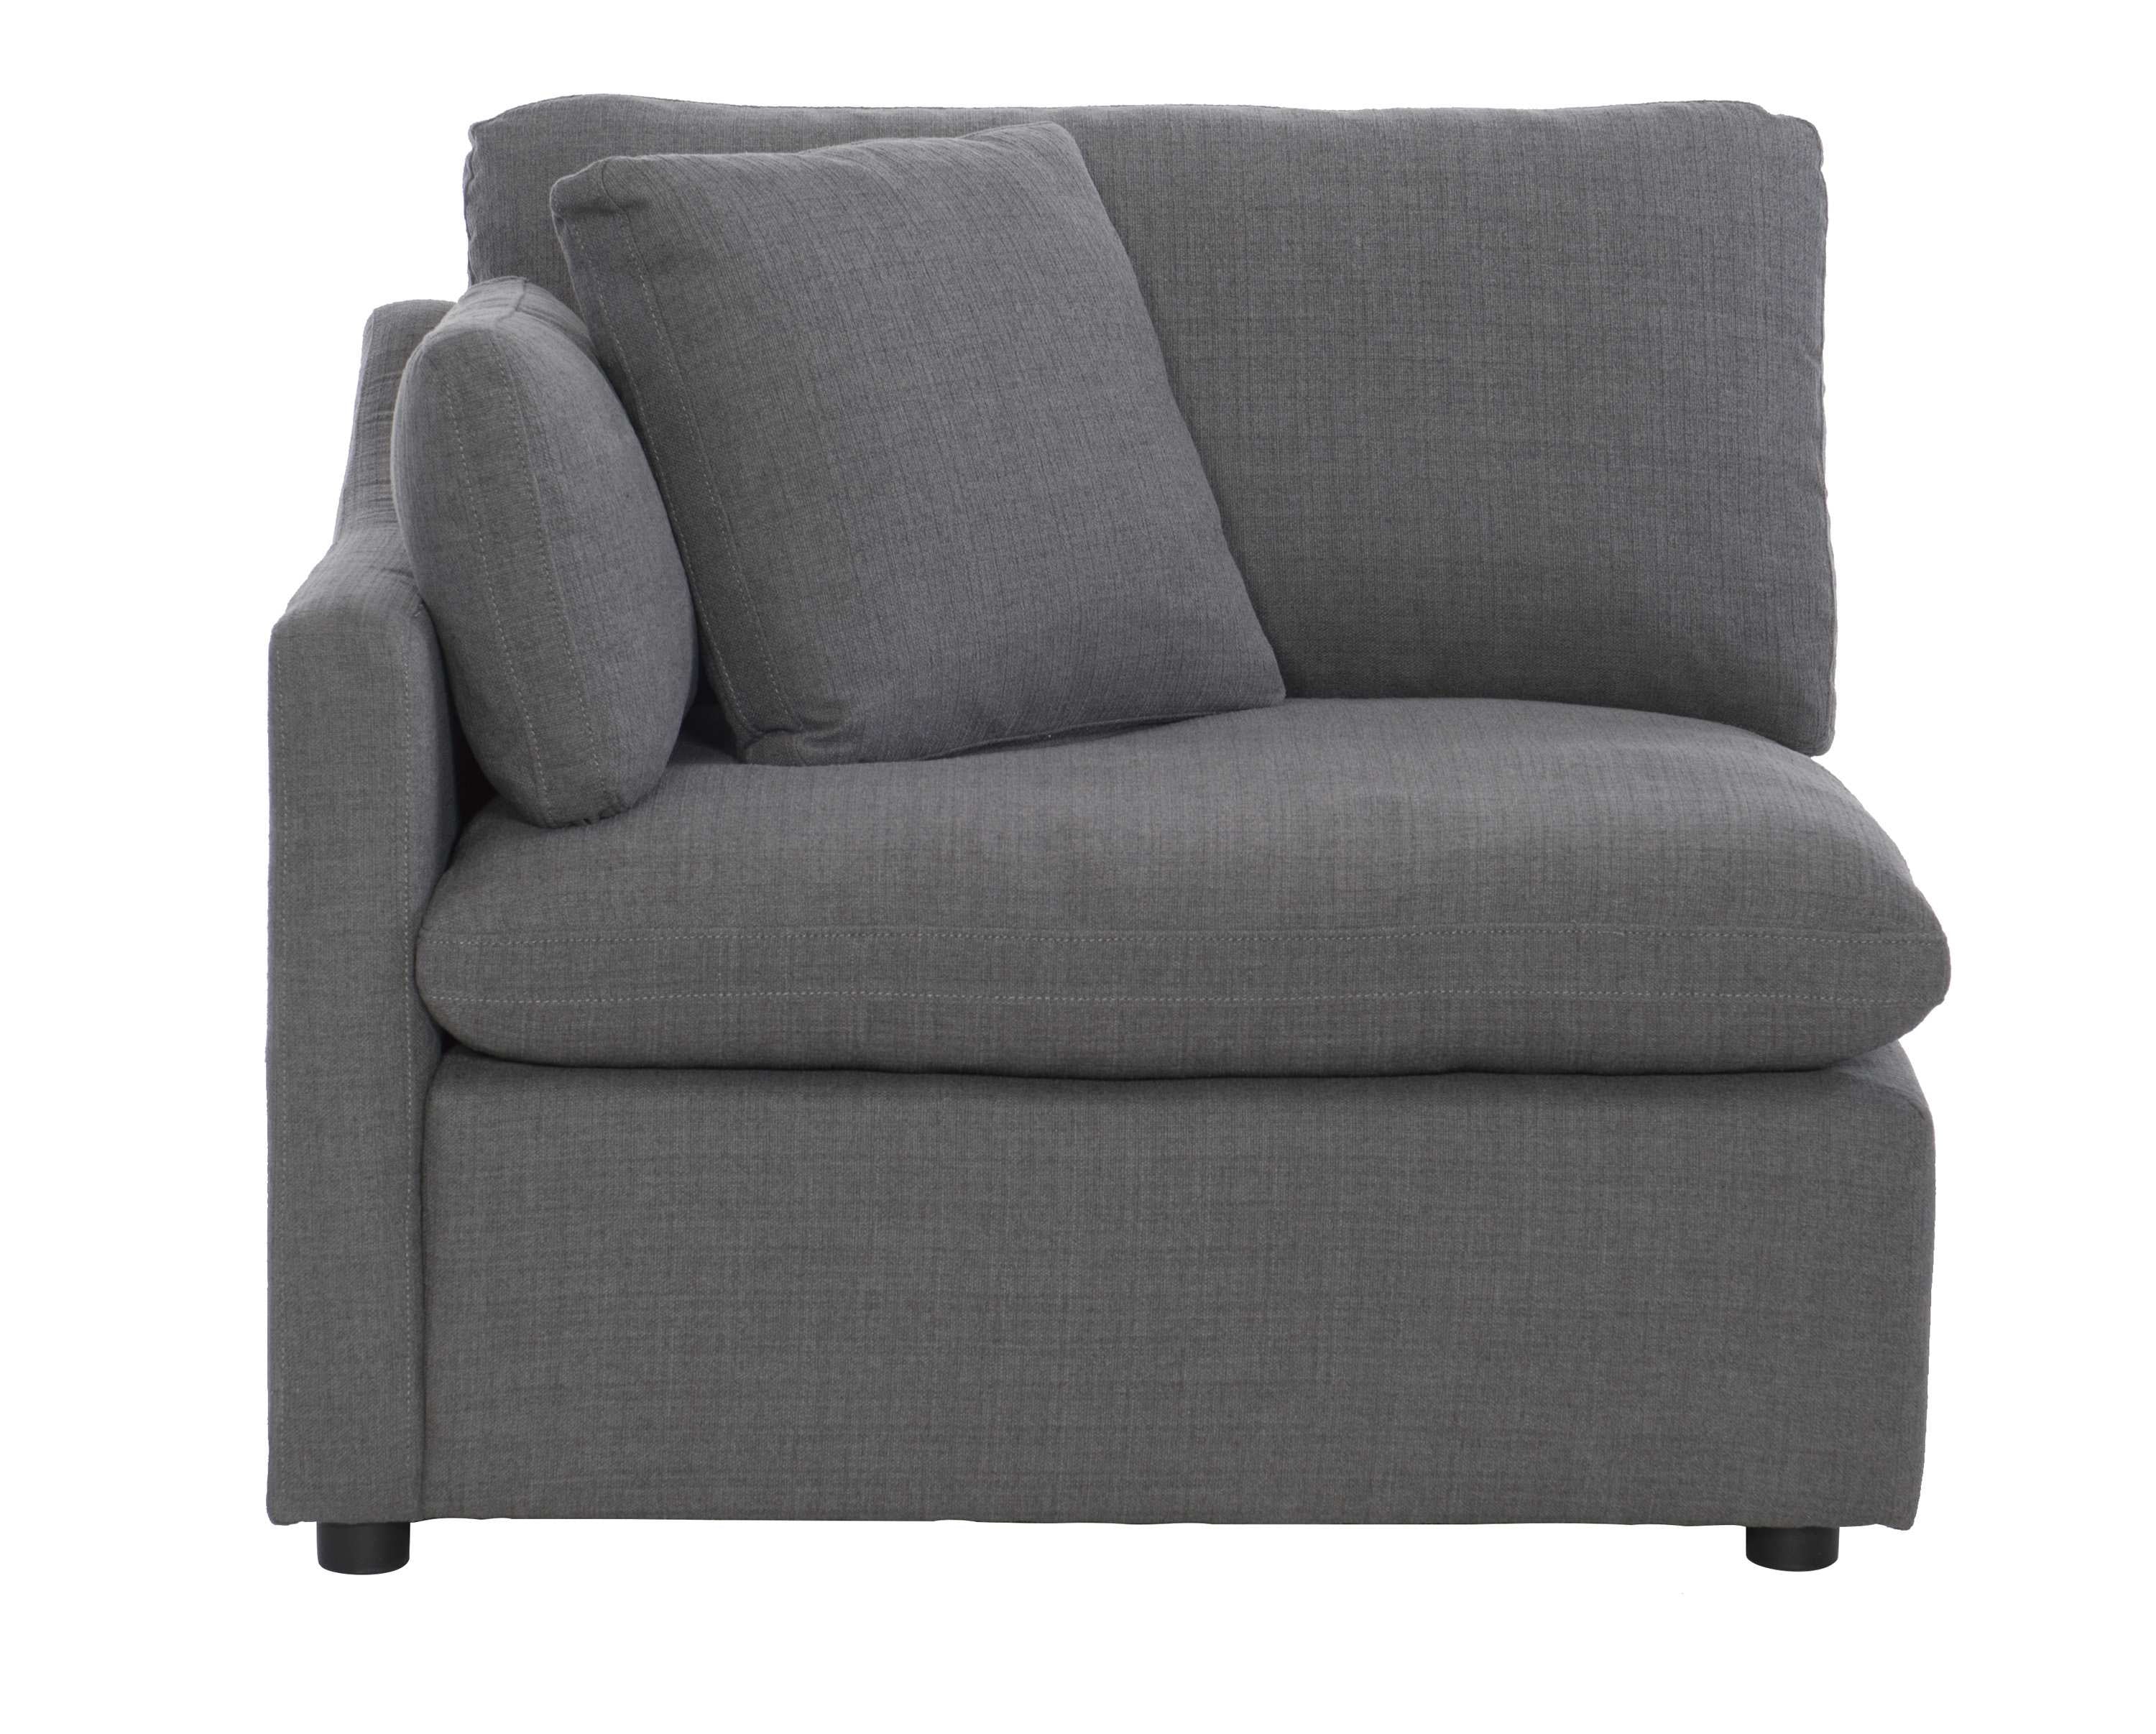 Howerton Sofa Collection Grey 9544